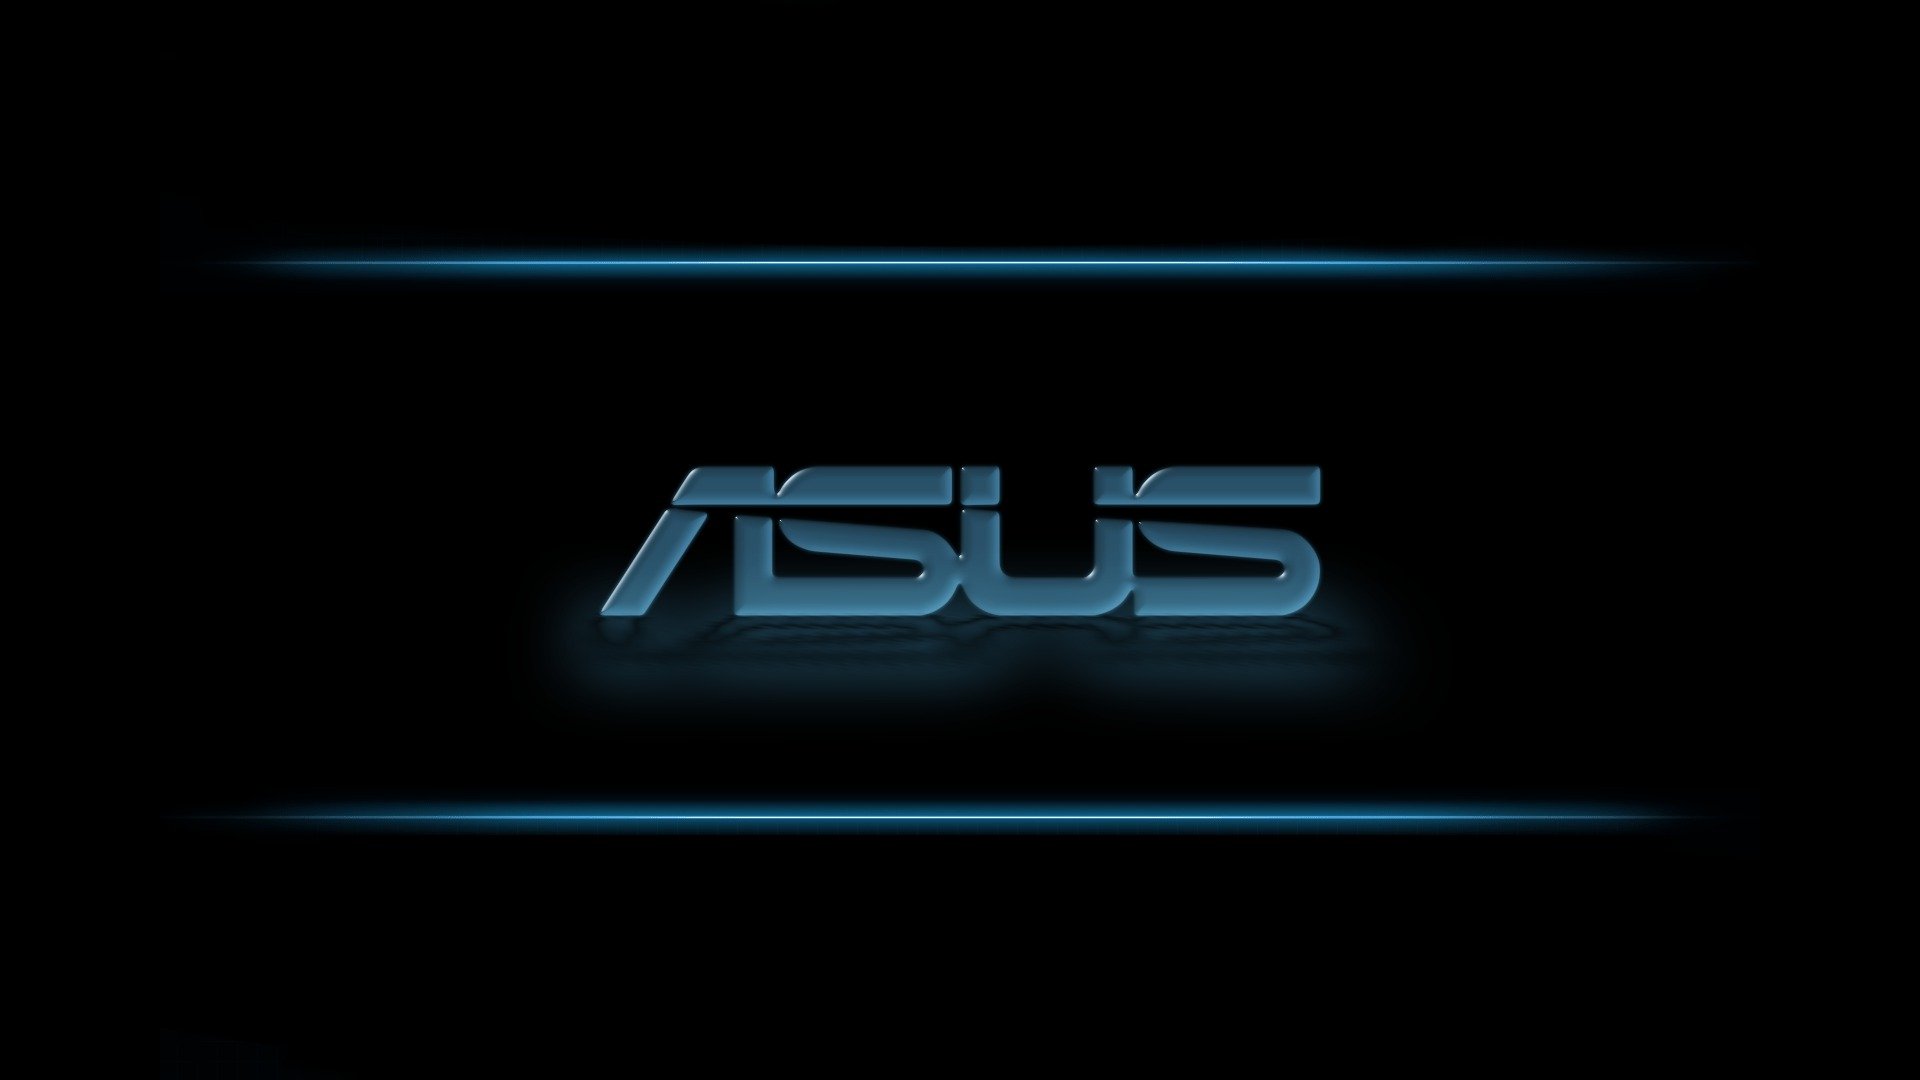 Asus qhd. U+Z logo. ASUS logo 1920 1080. Заставка ASUS. ASUS картинки на рабочий стол.